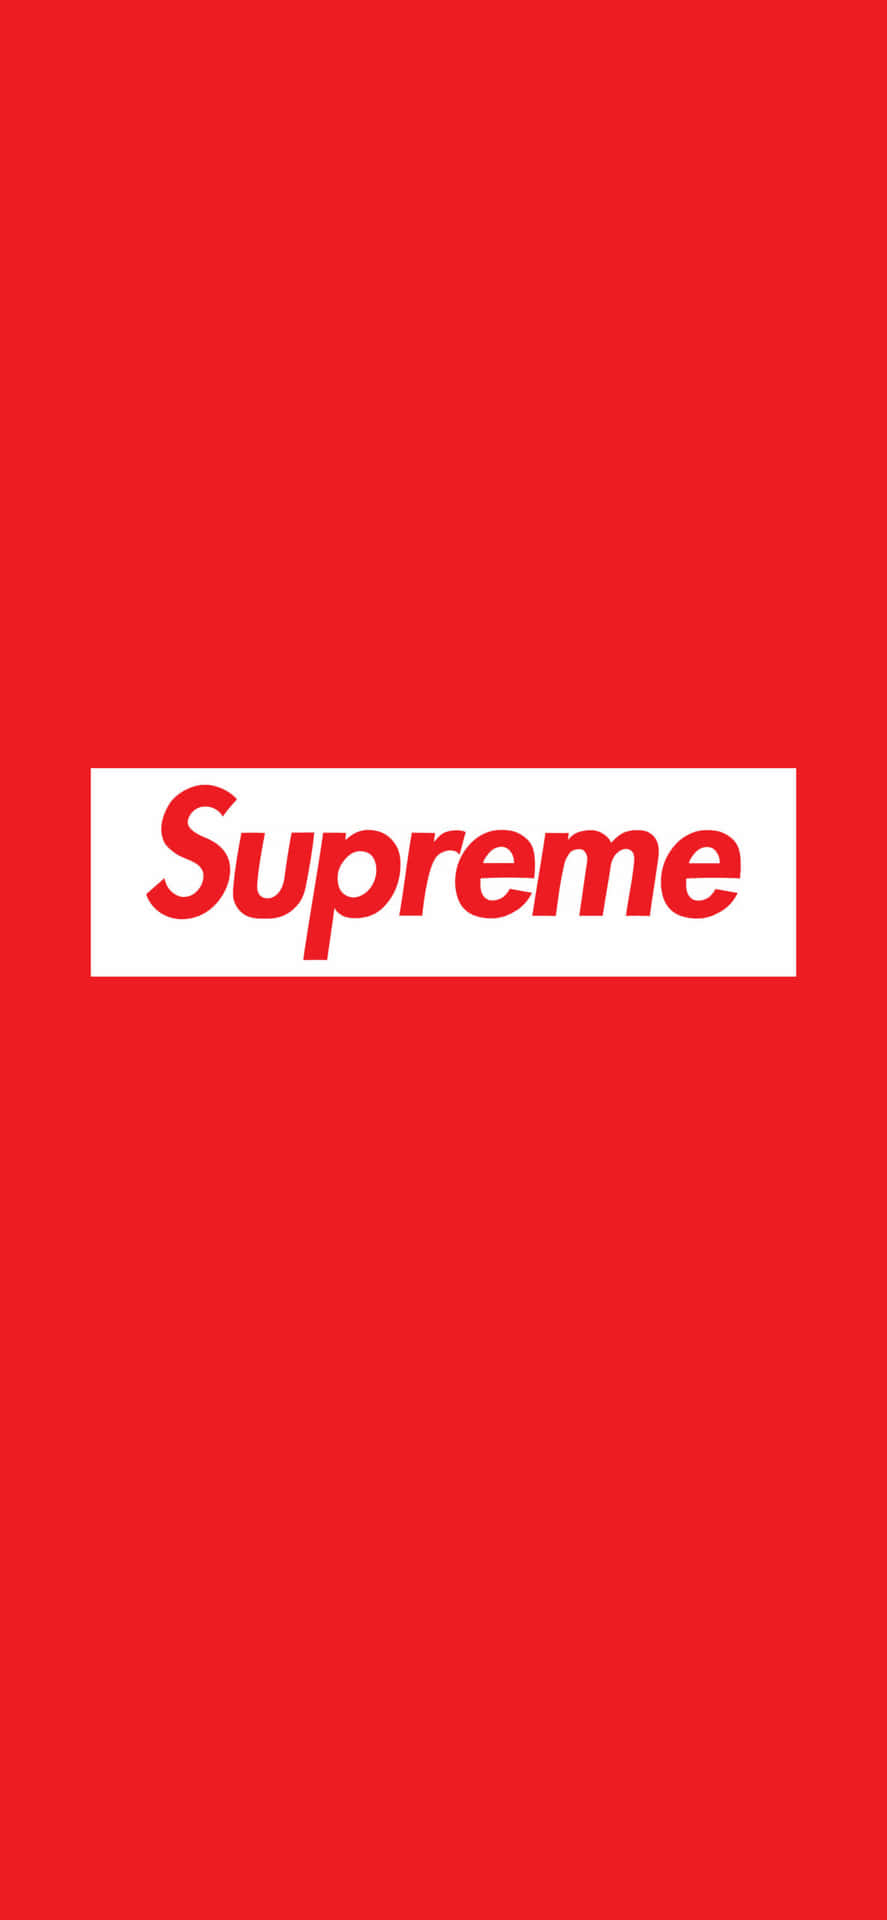 Download Supreme Logo Wallpaper | Wallpapers.com